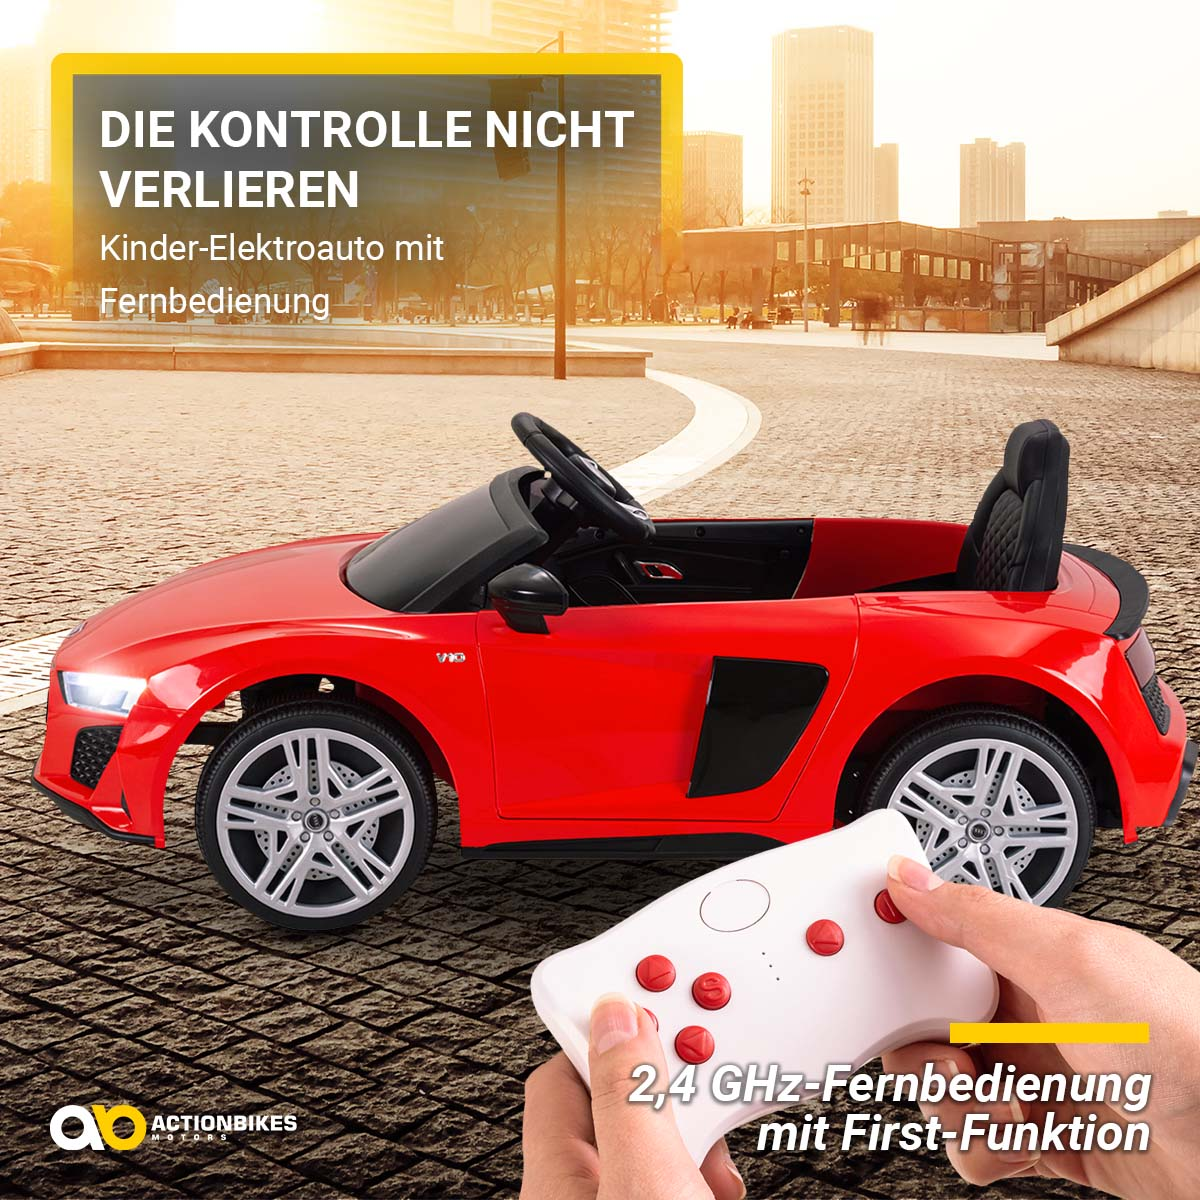 ACTIONBIKES MOTORS Audi R8 4S Lizenziert Elektroauto Spyder